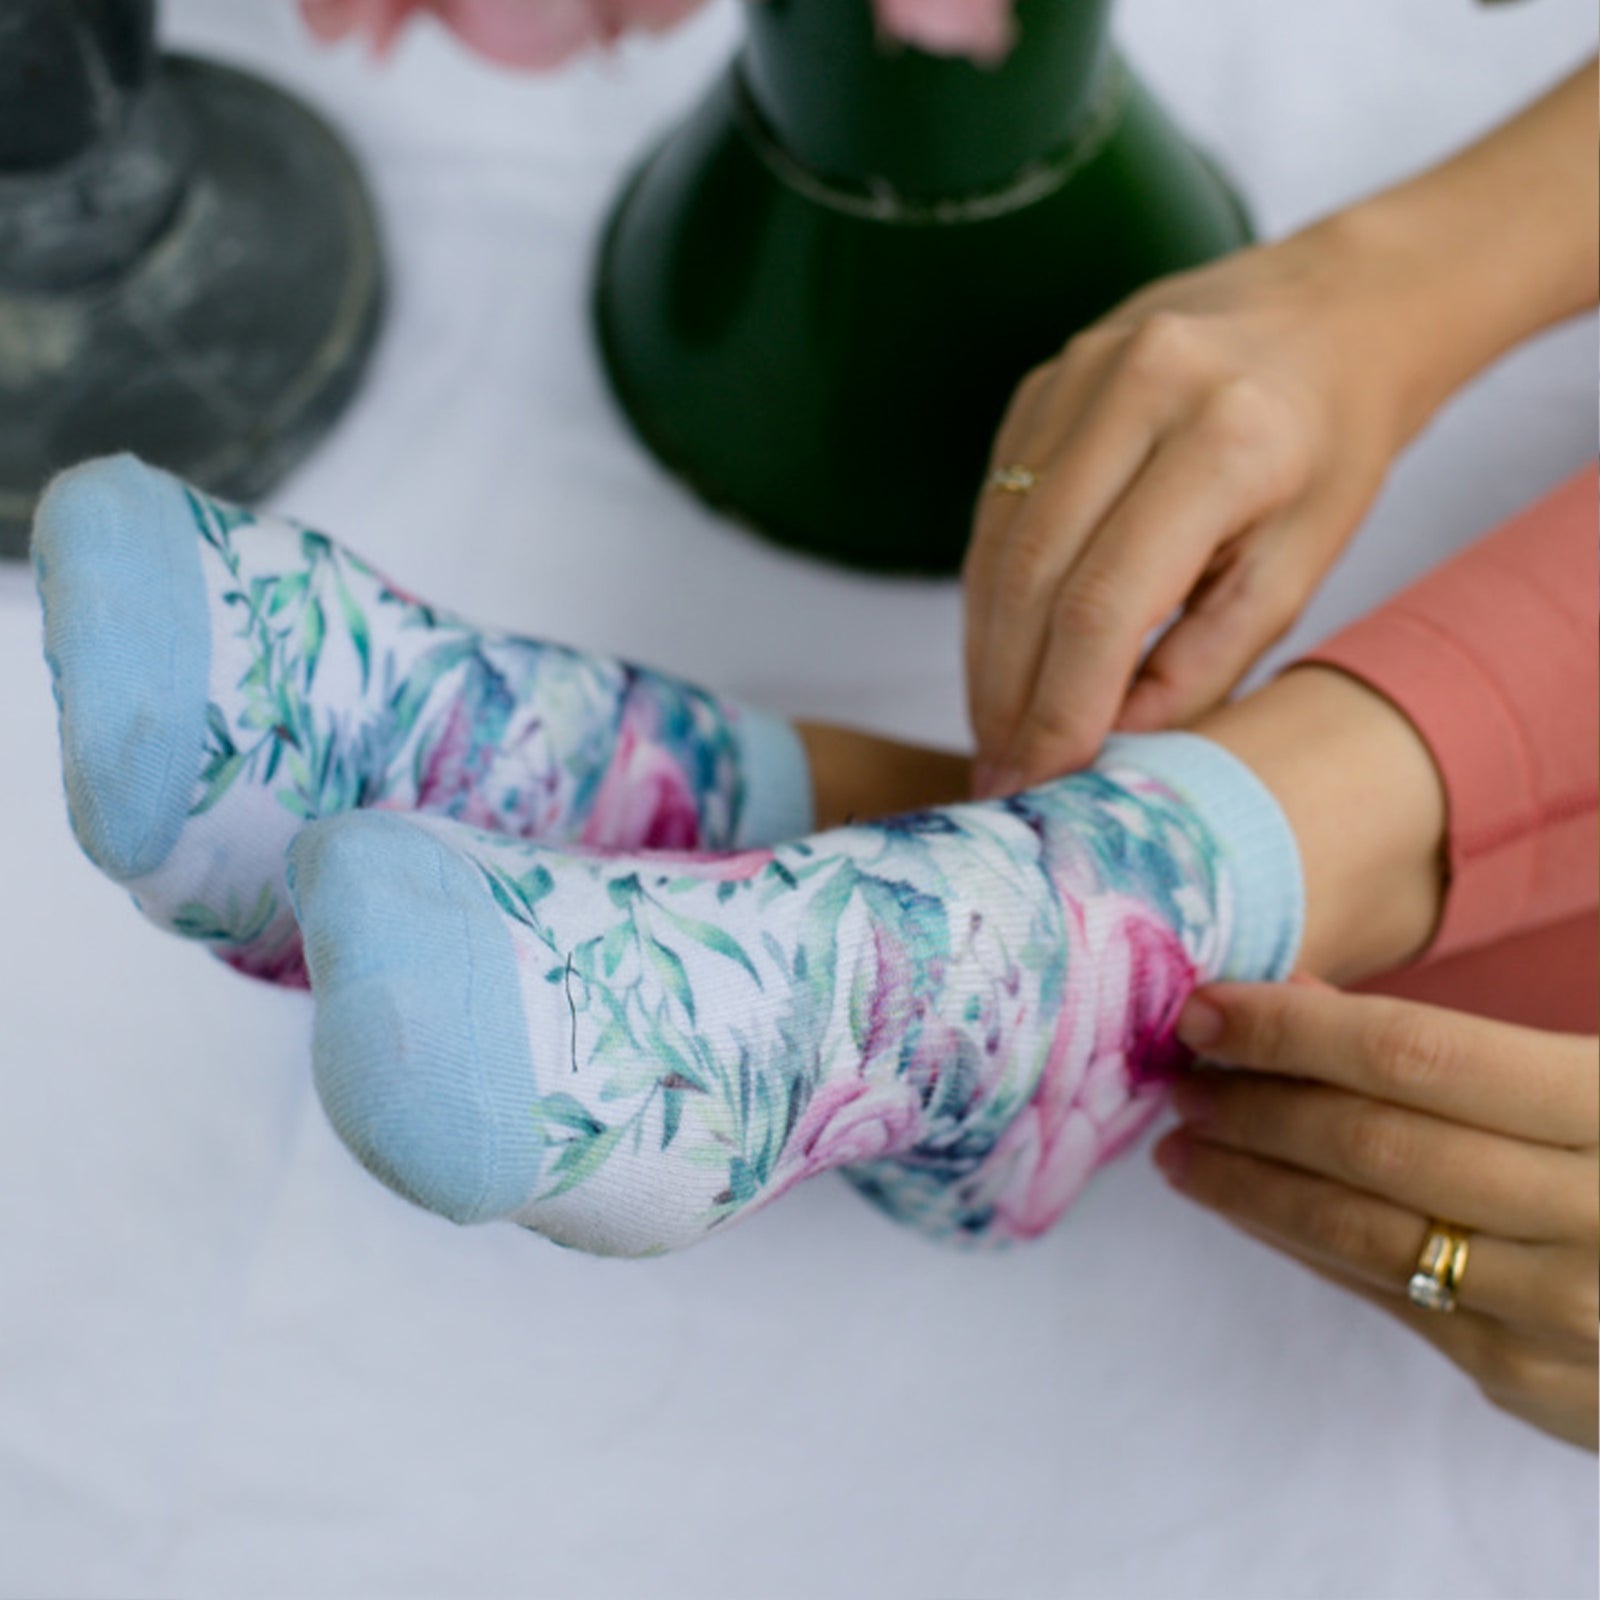 The Best Pilates Grip Socks to Shop in Australia 2023